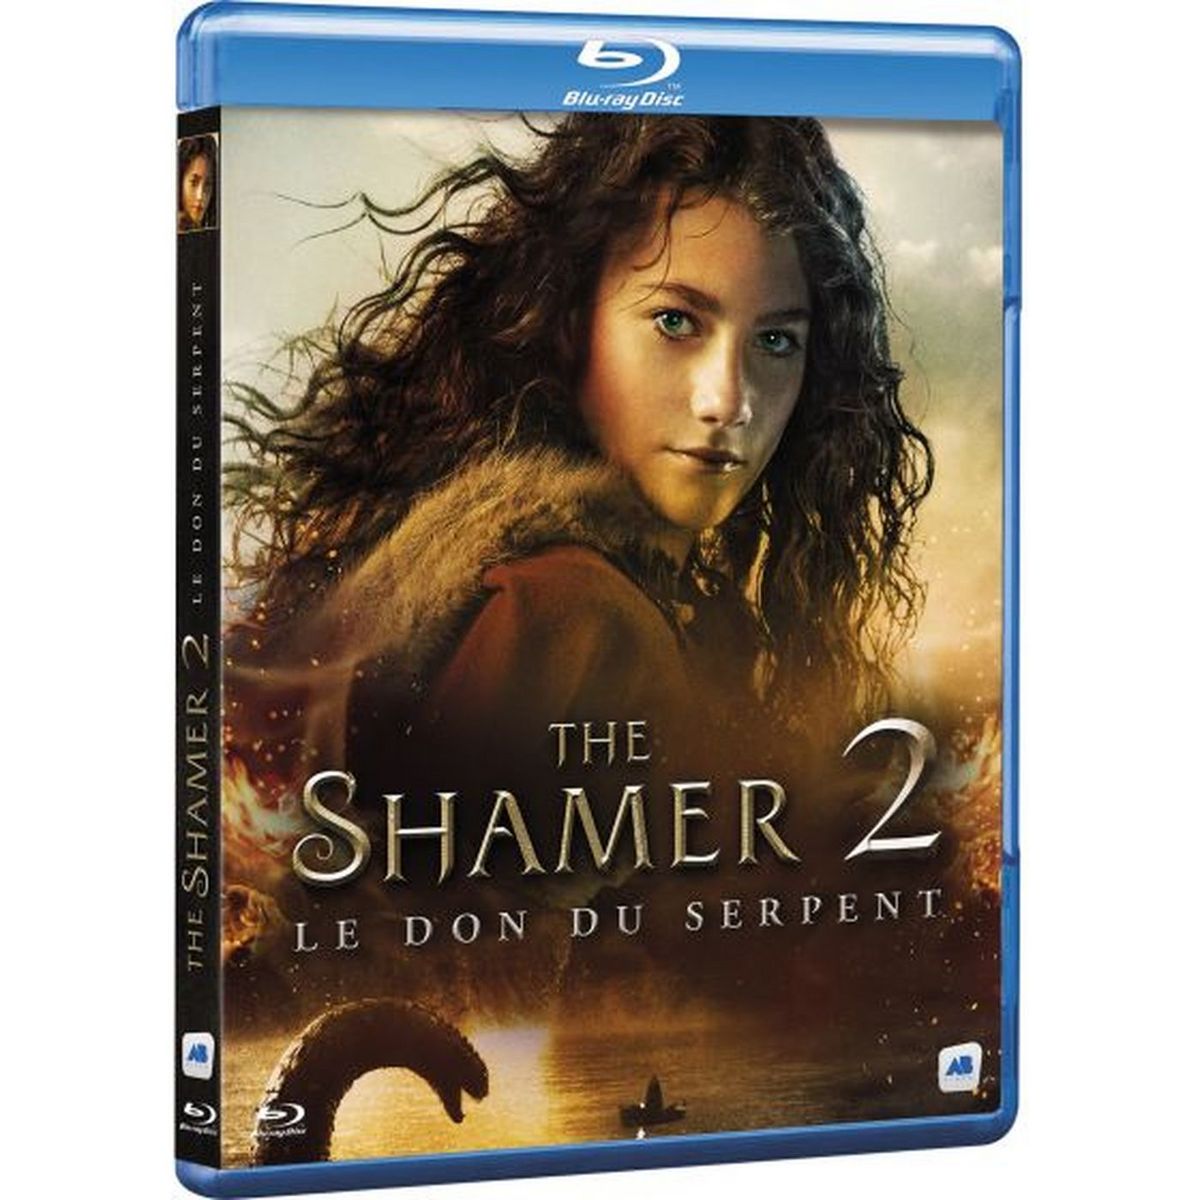 The Shamer 2, le don du serpent BLU-RAY